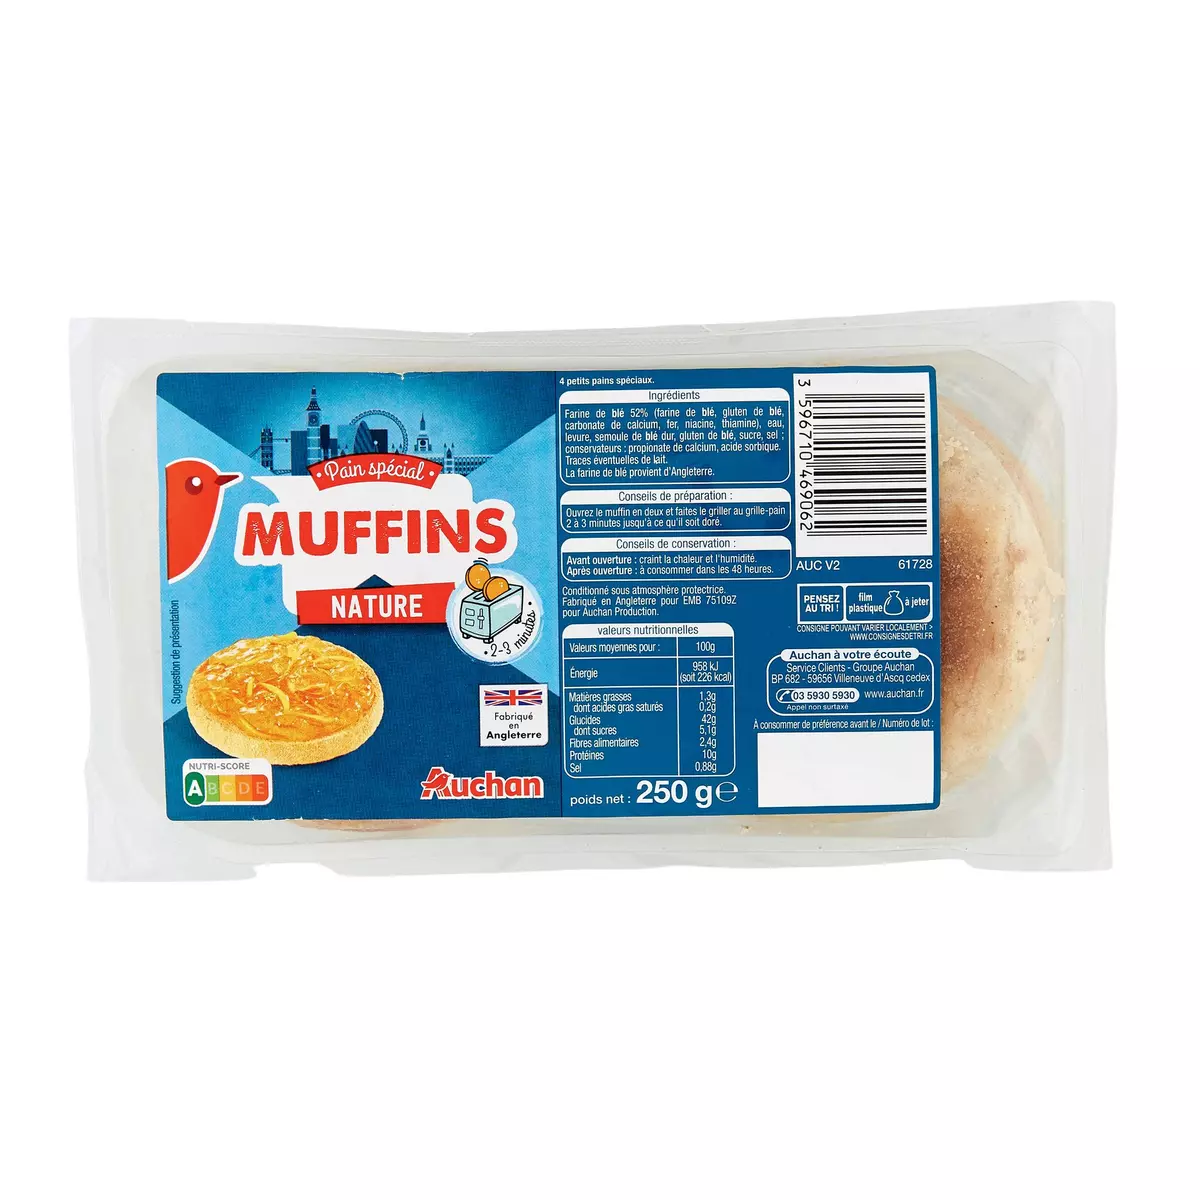 AUCHAN Muffins nature 4 muffins 250g